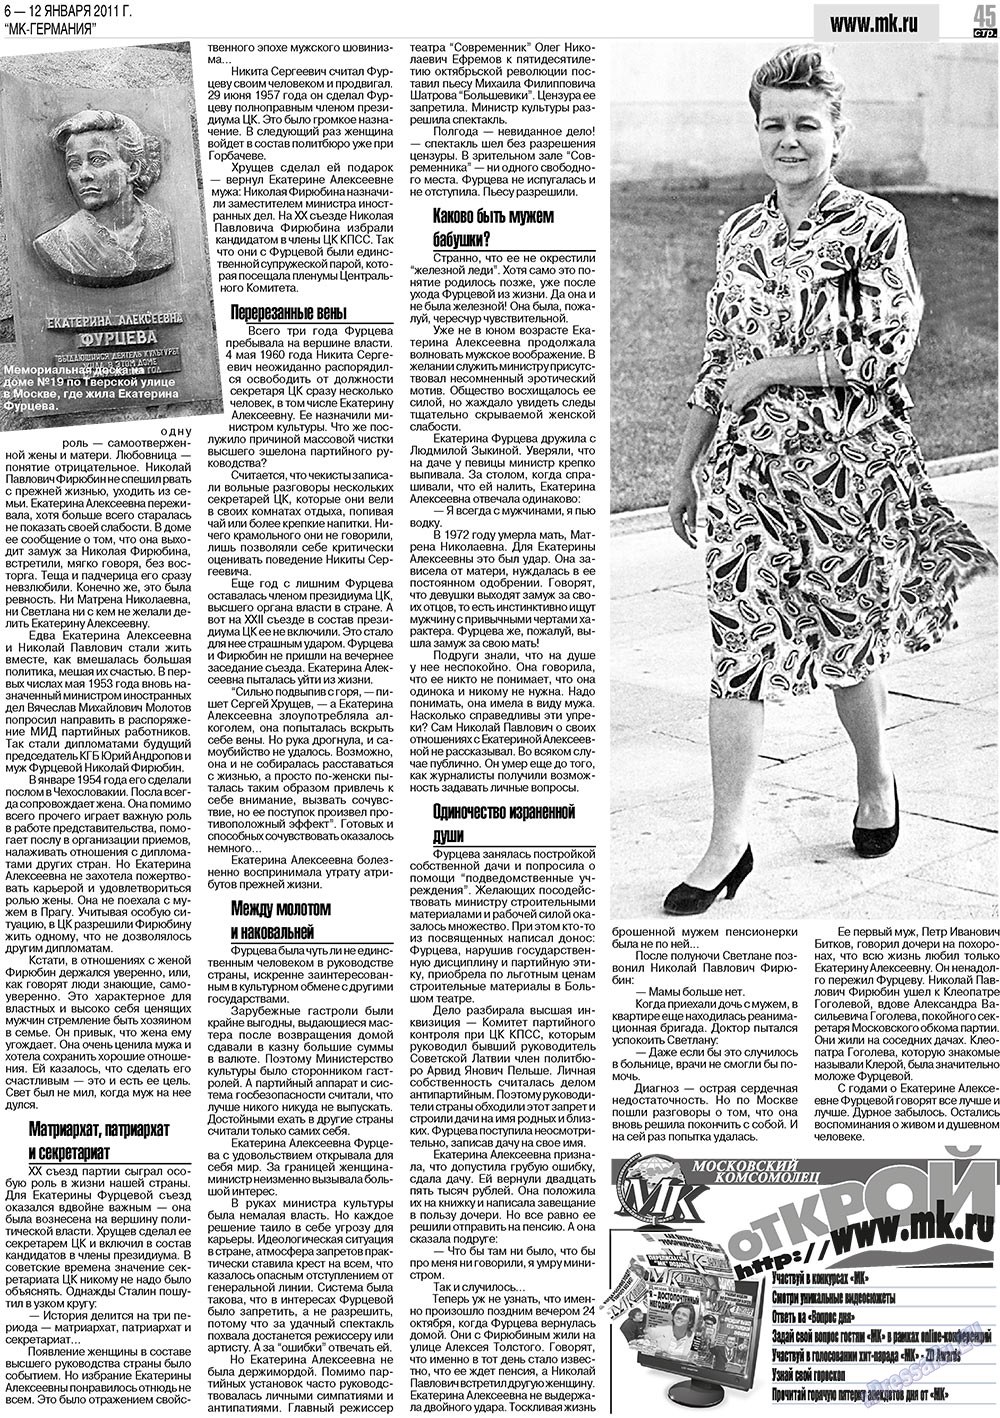 МК-Германия, газета. 2011 №1 стр.45